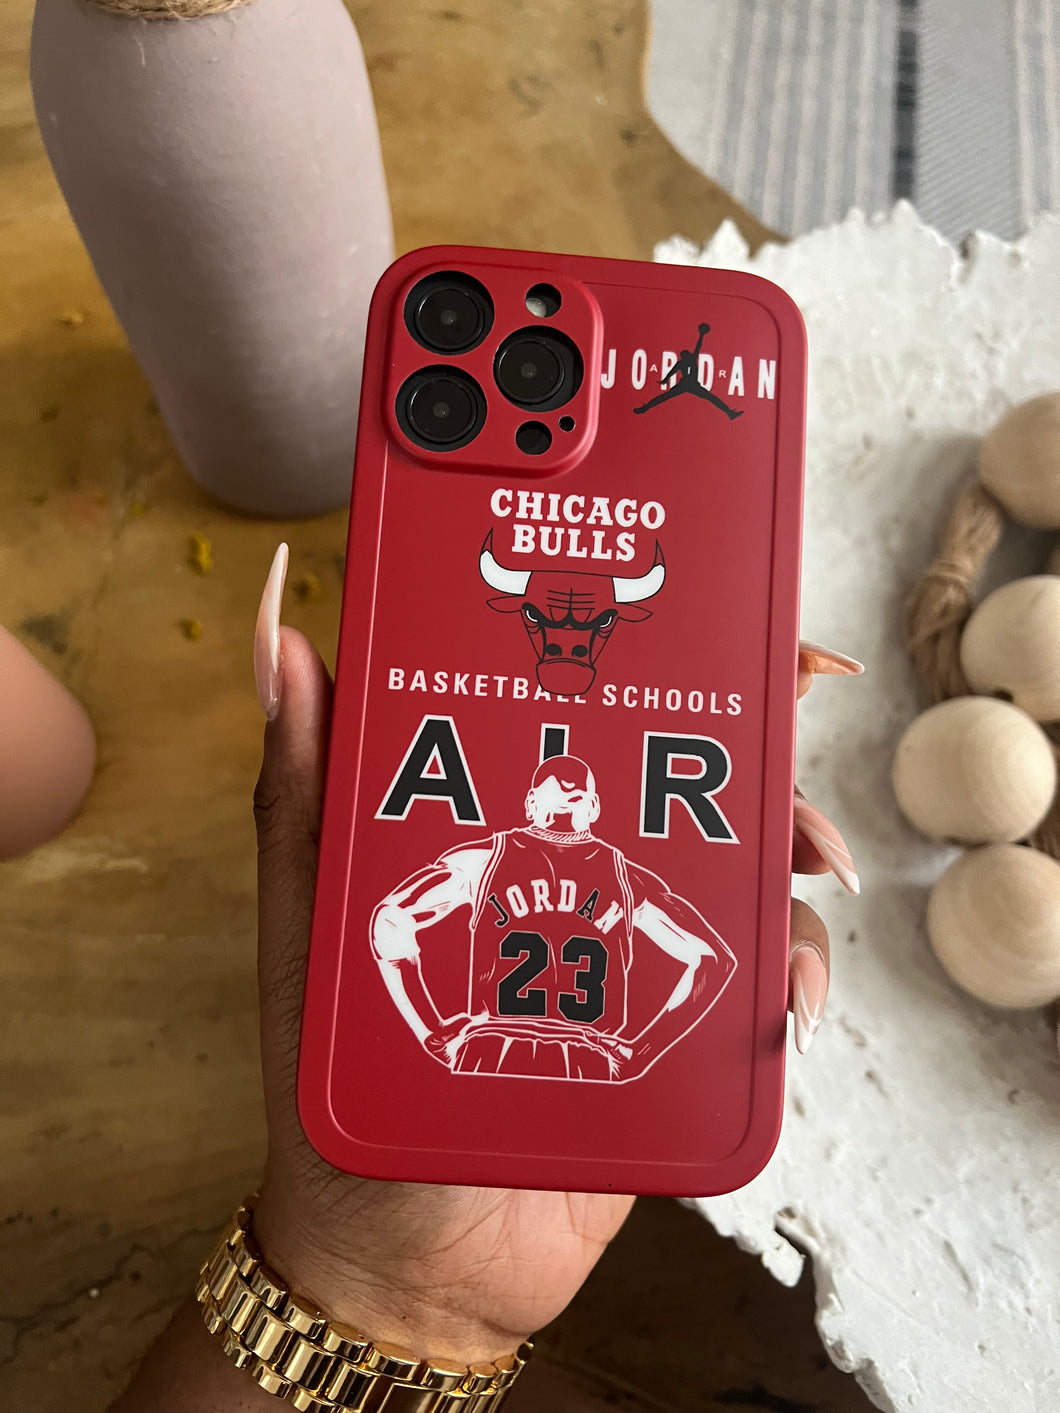 Red Chicago Bulls phone case